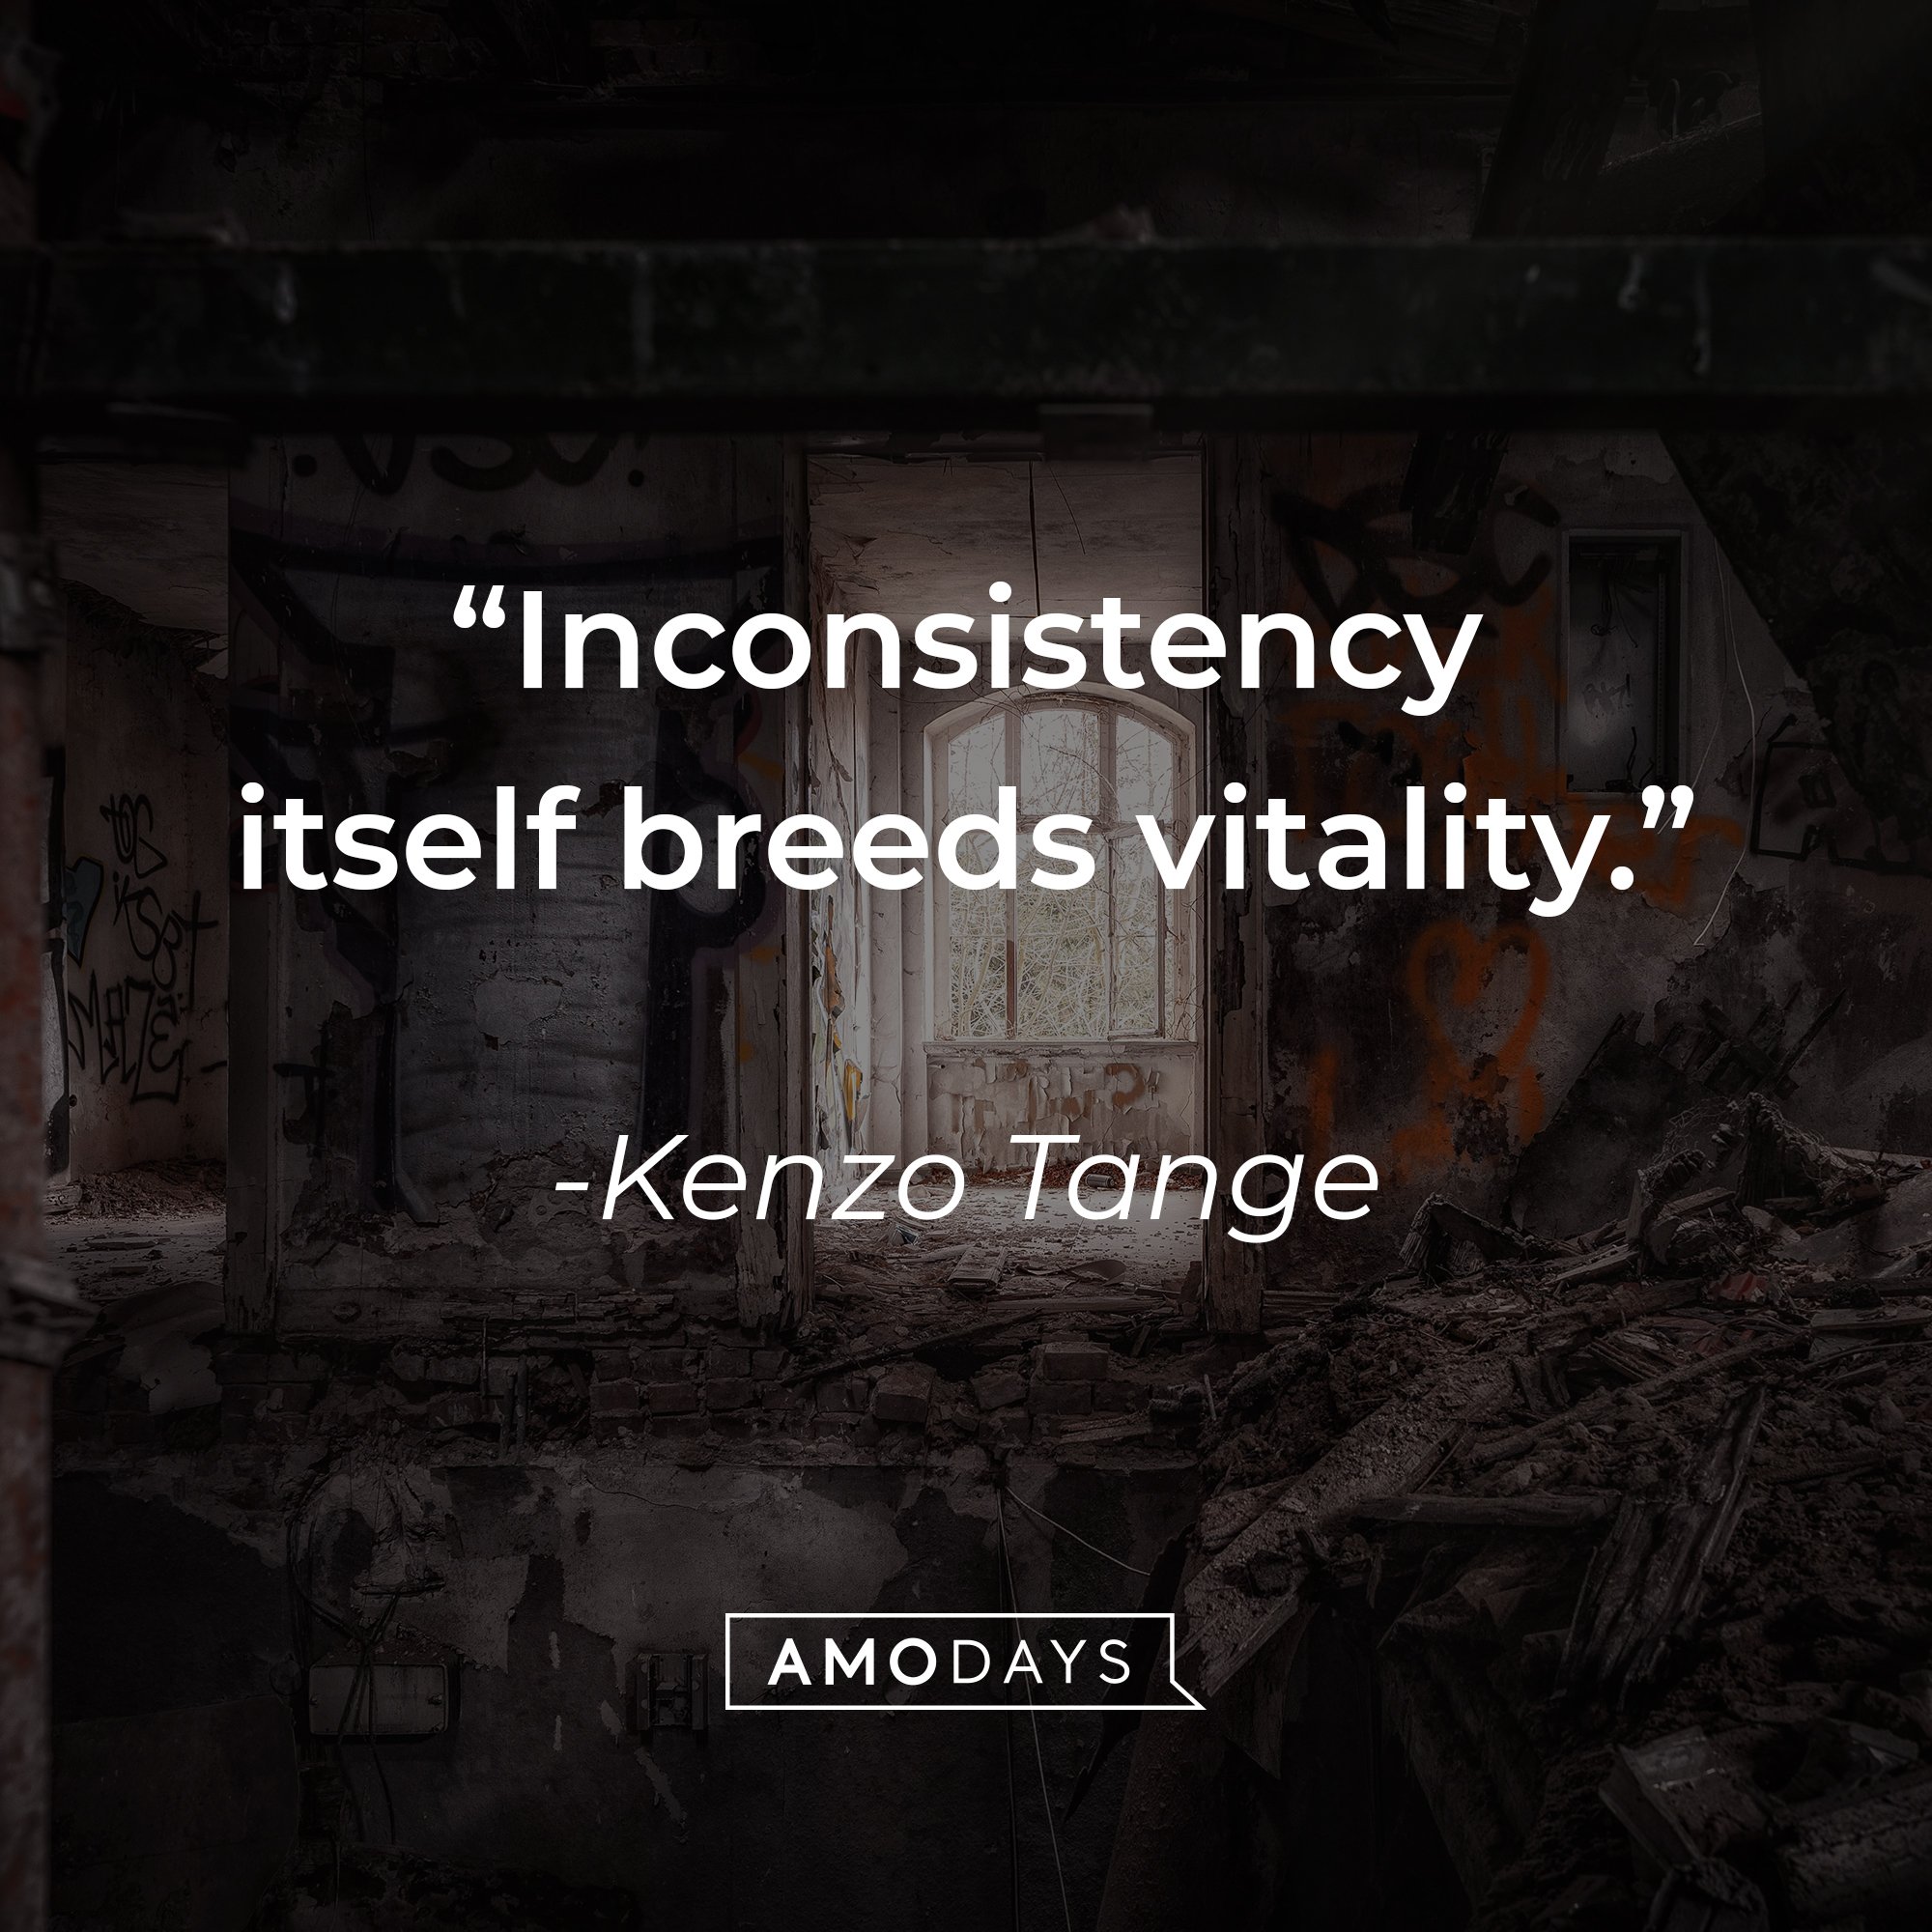 Kenzo Tange's quote: "Inconsistency itself breeds vitality." | Image: AmoDays